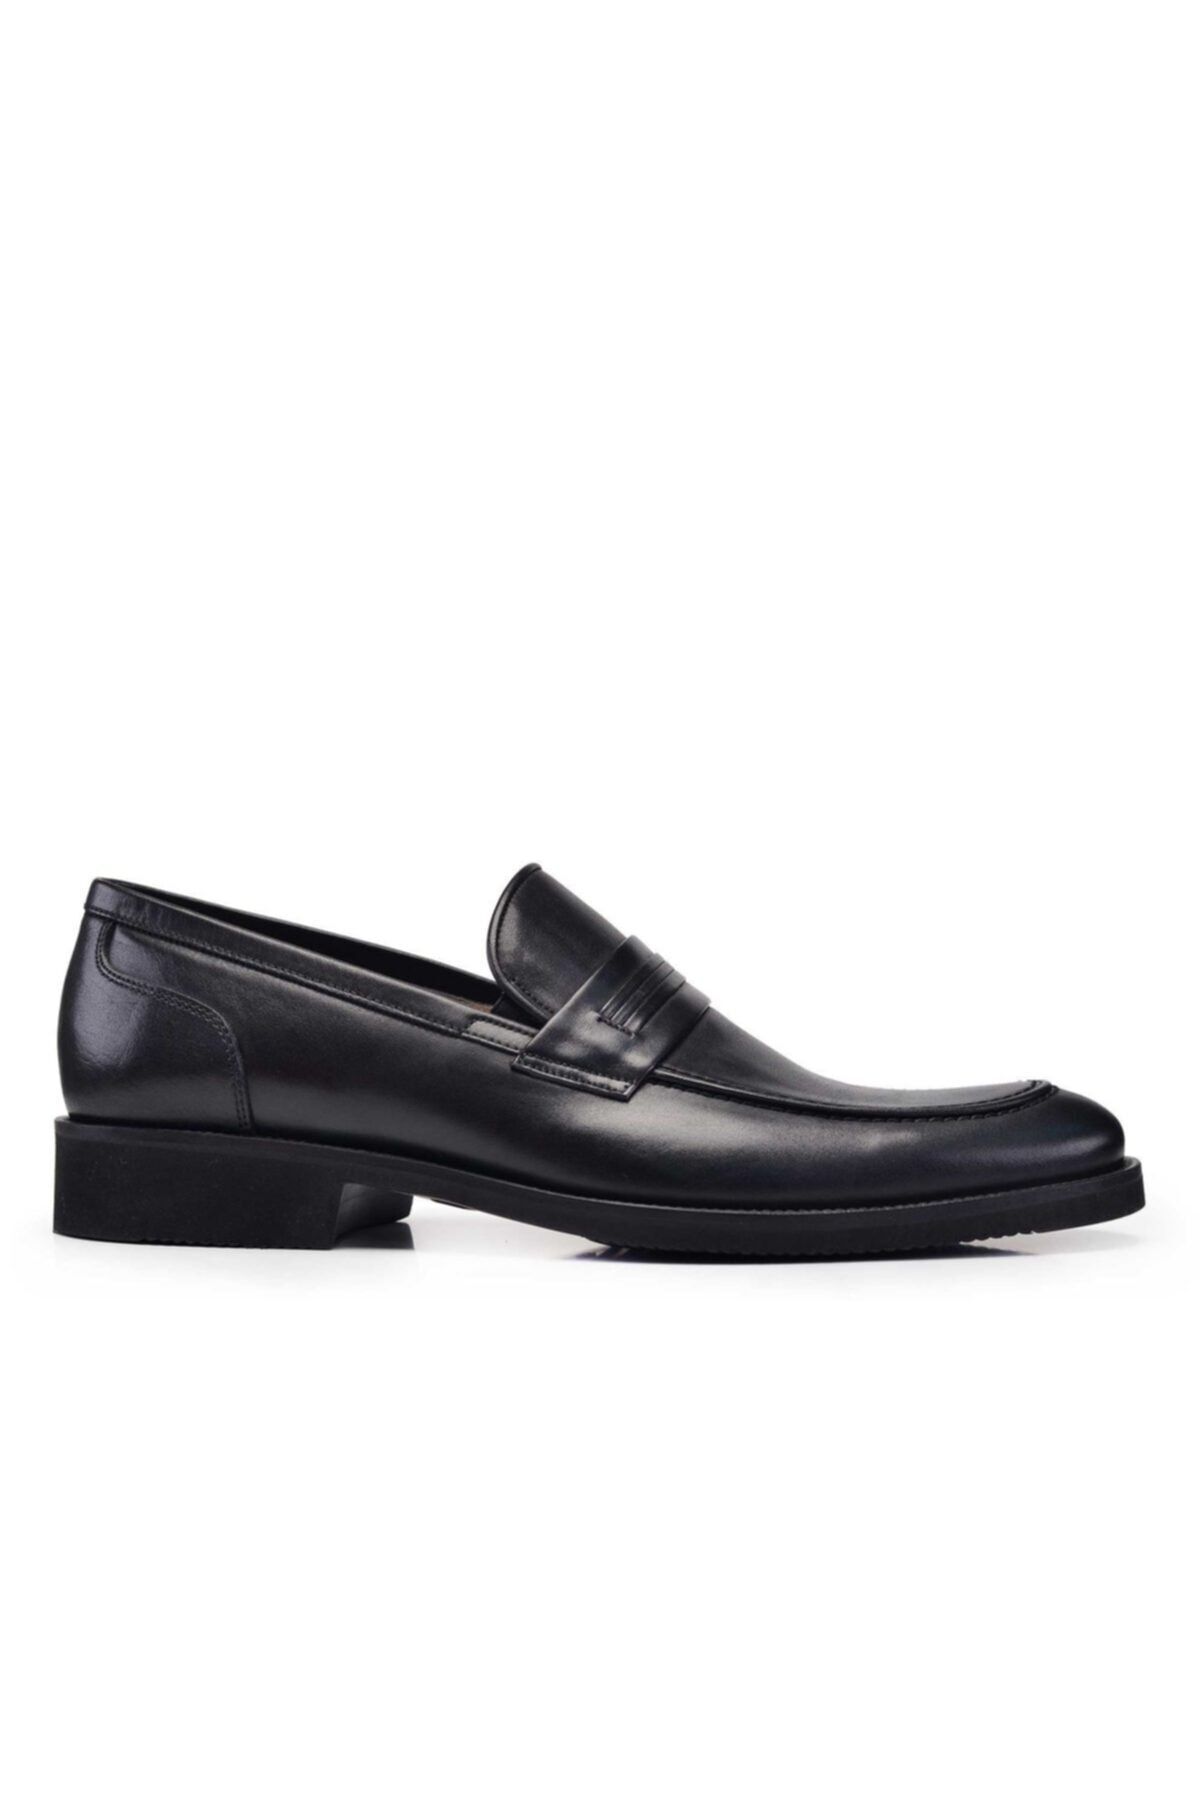 Nevzat Onay Hakiki Deri Siyah Klasik Loafer Erkek Ayakkabı -7569-